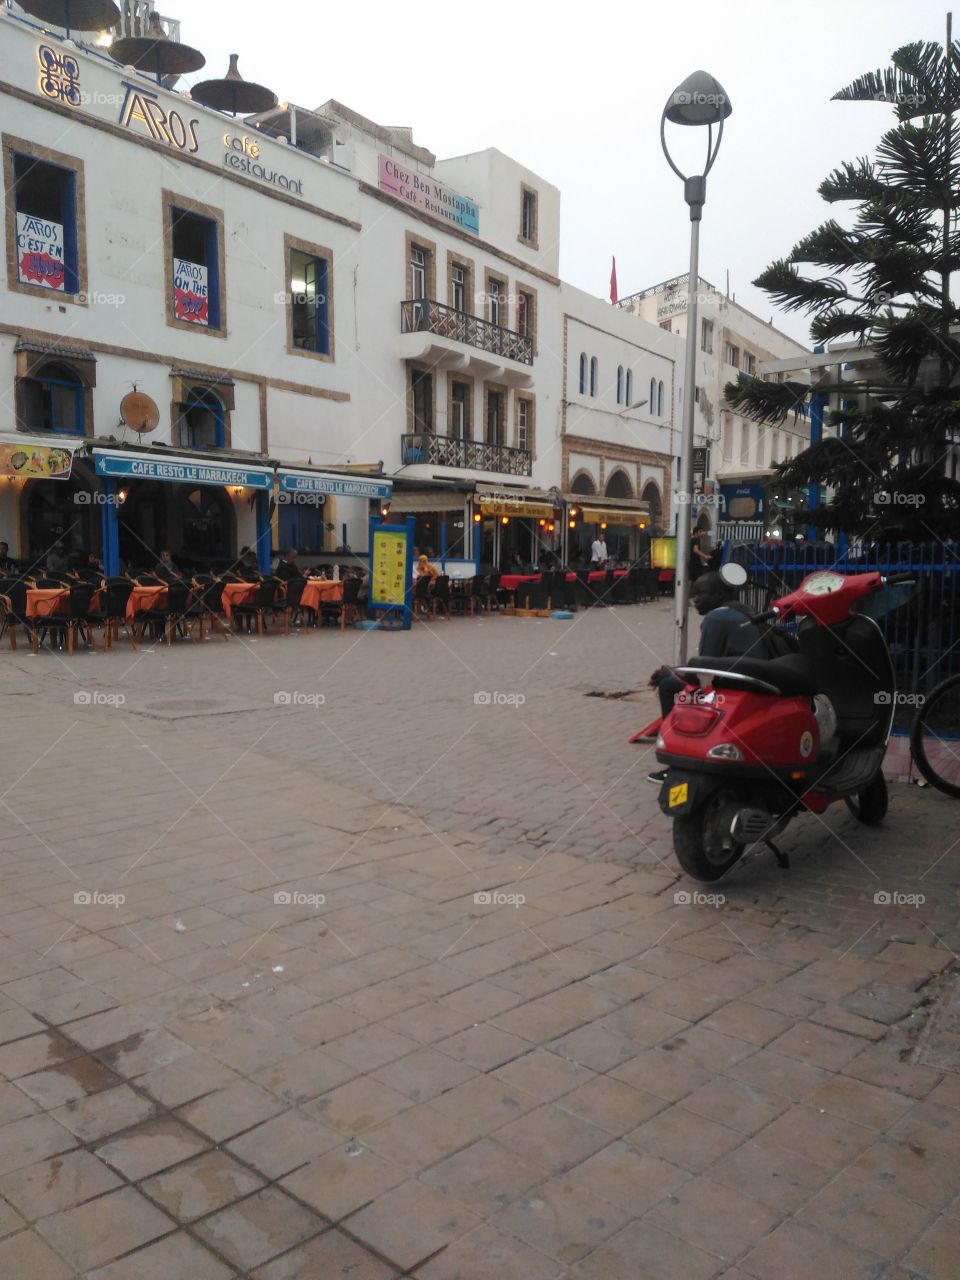 walking through the city : Essaouira